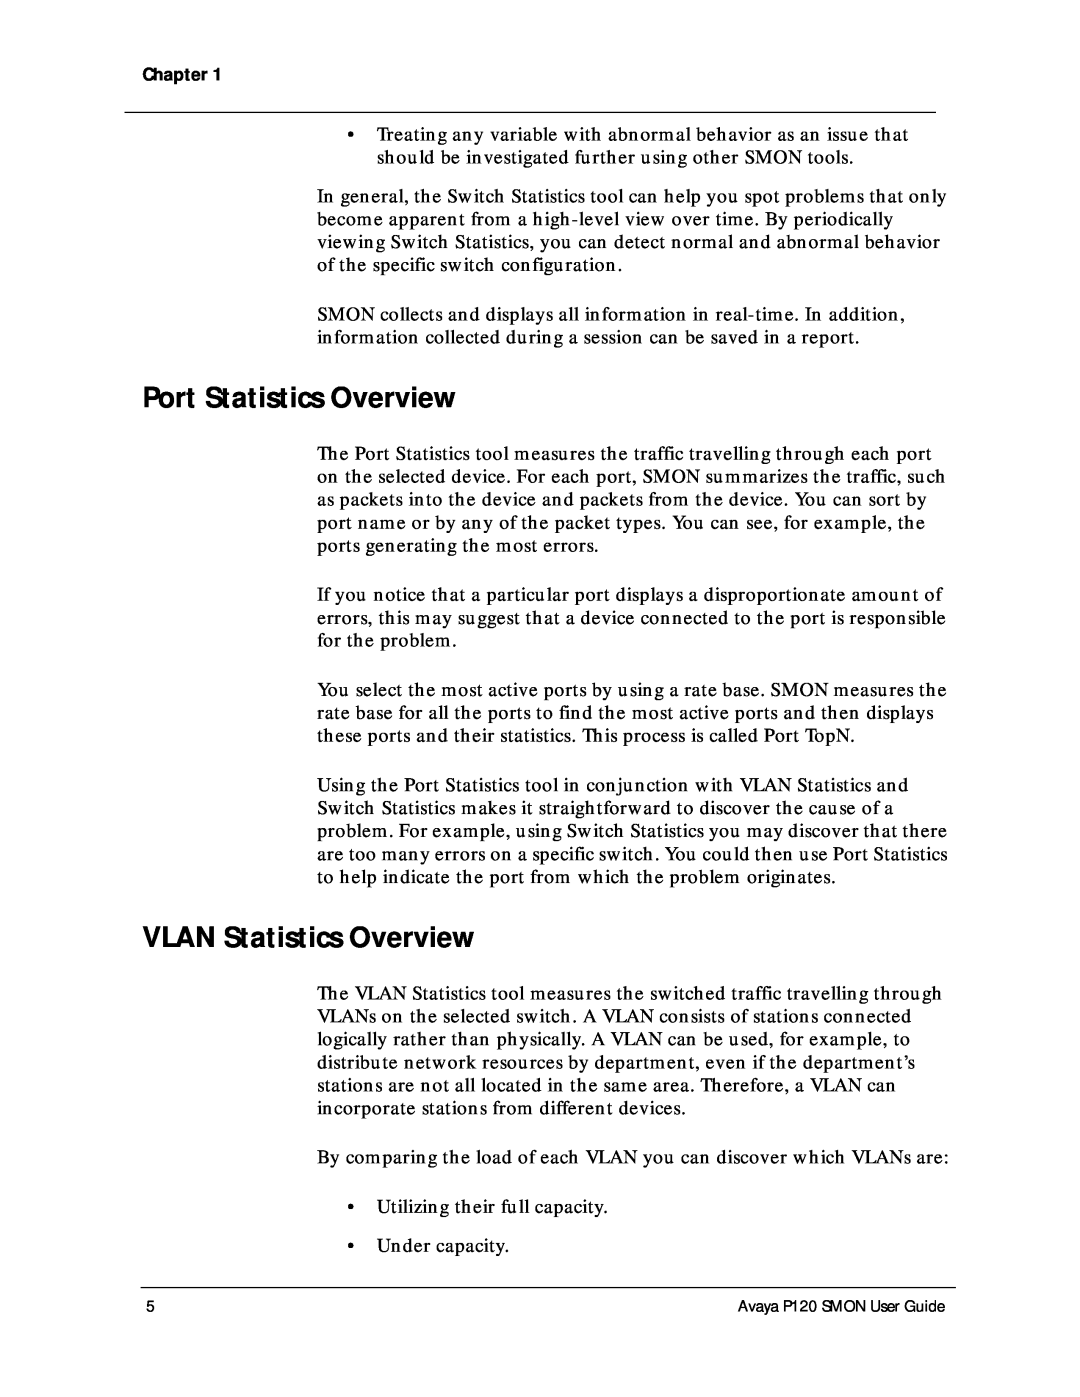 Avaya P120 SMON manual Port Statistics Overview, VLAN Statistics Overview 